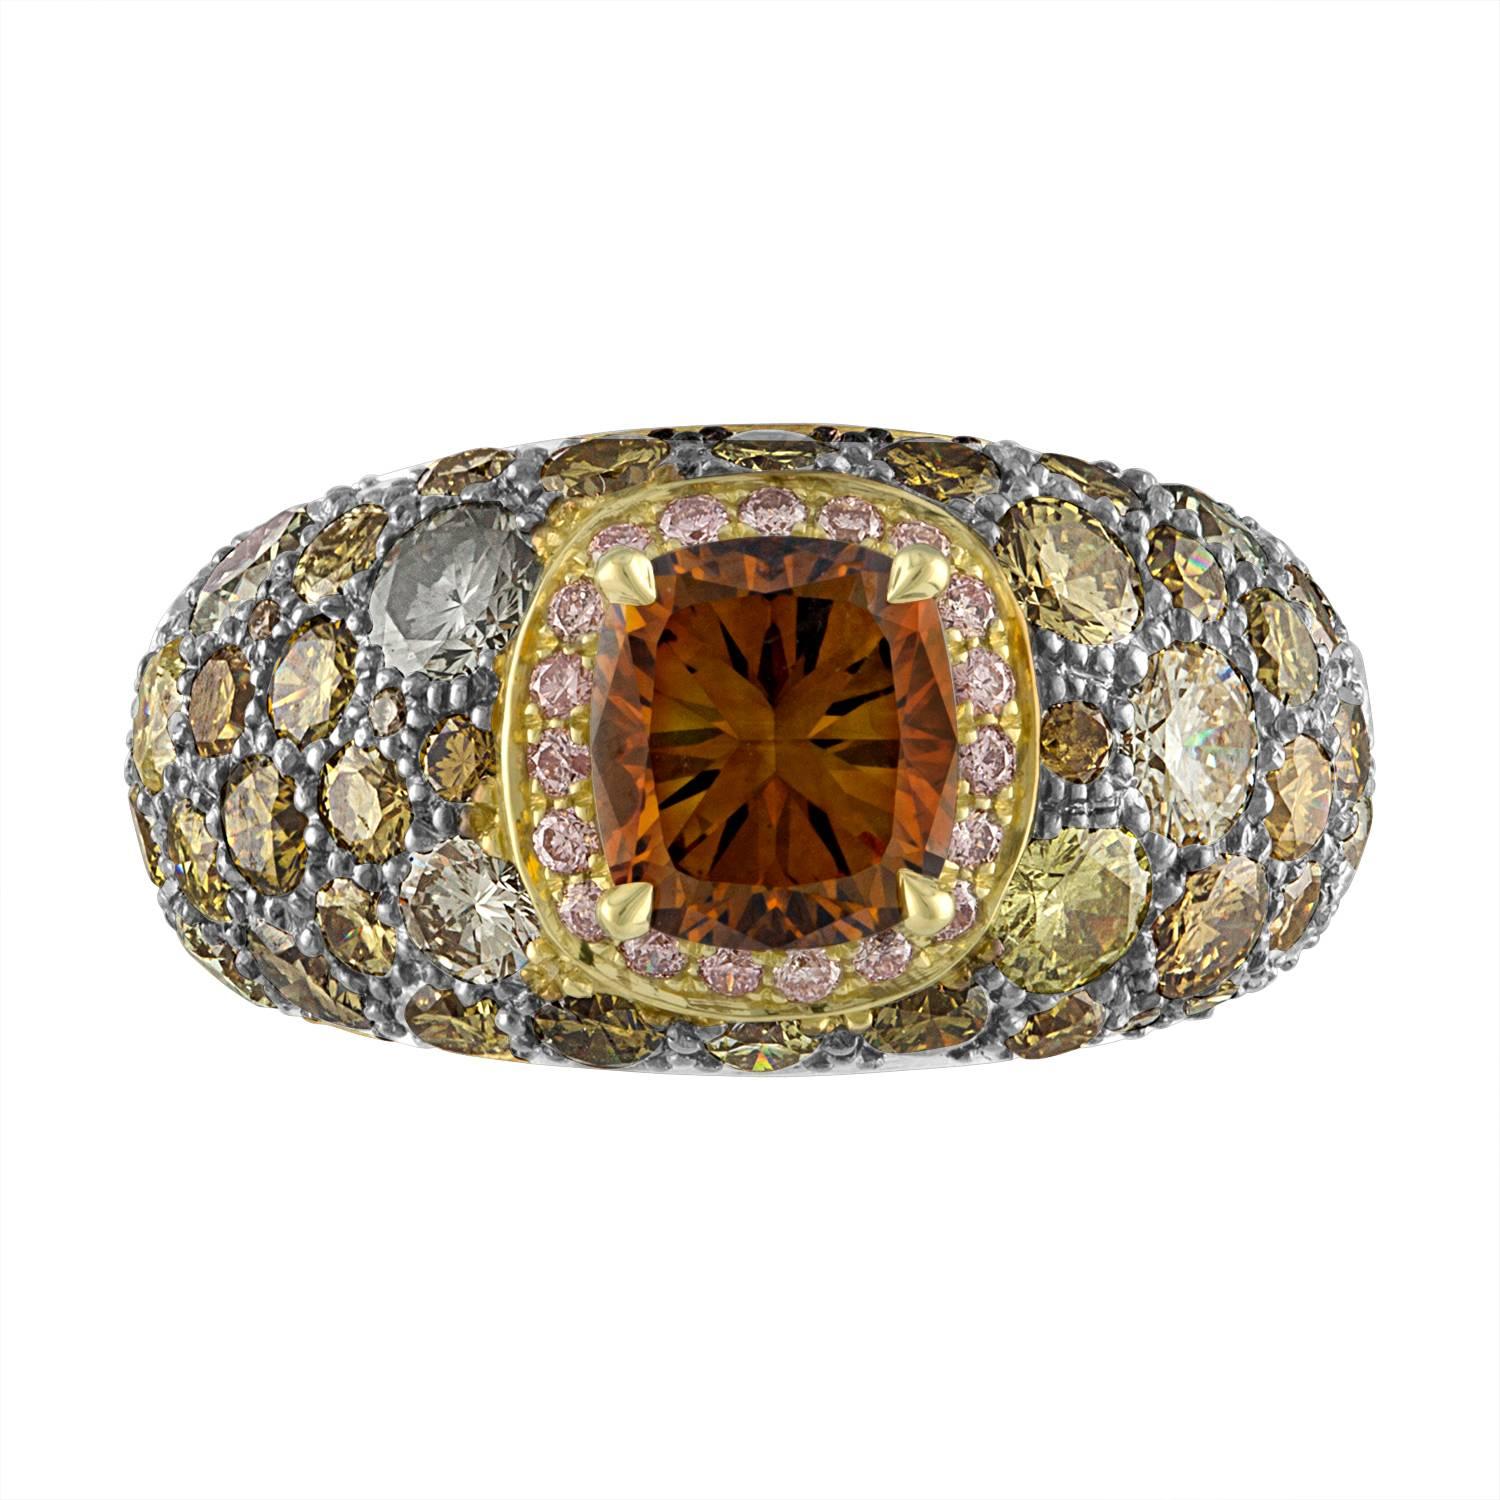 2.02 GIA Certified Cushion Cut Diamond Ring in 18 Karat Yellow Gold